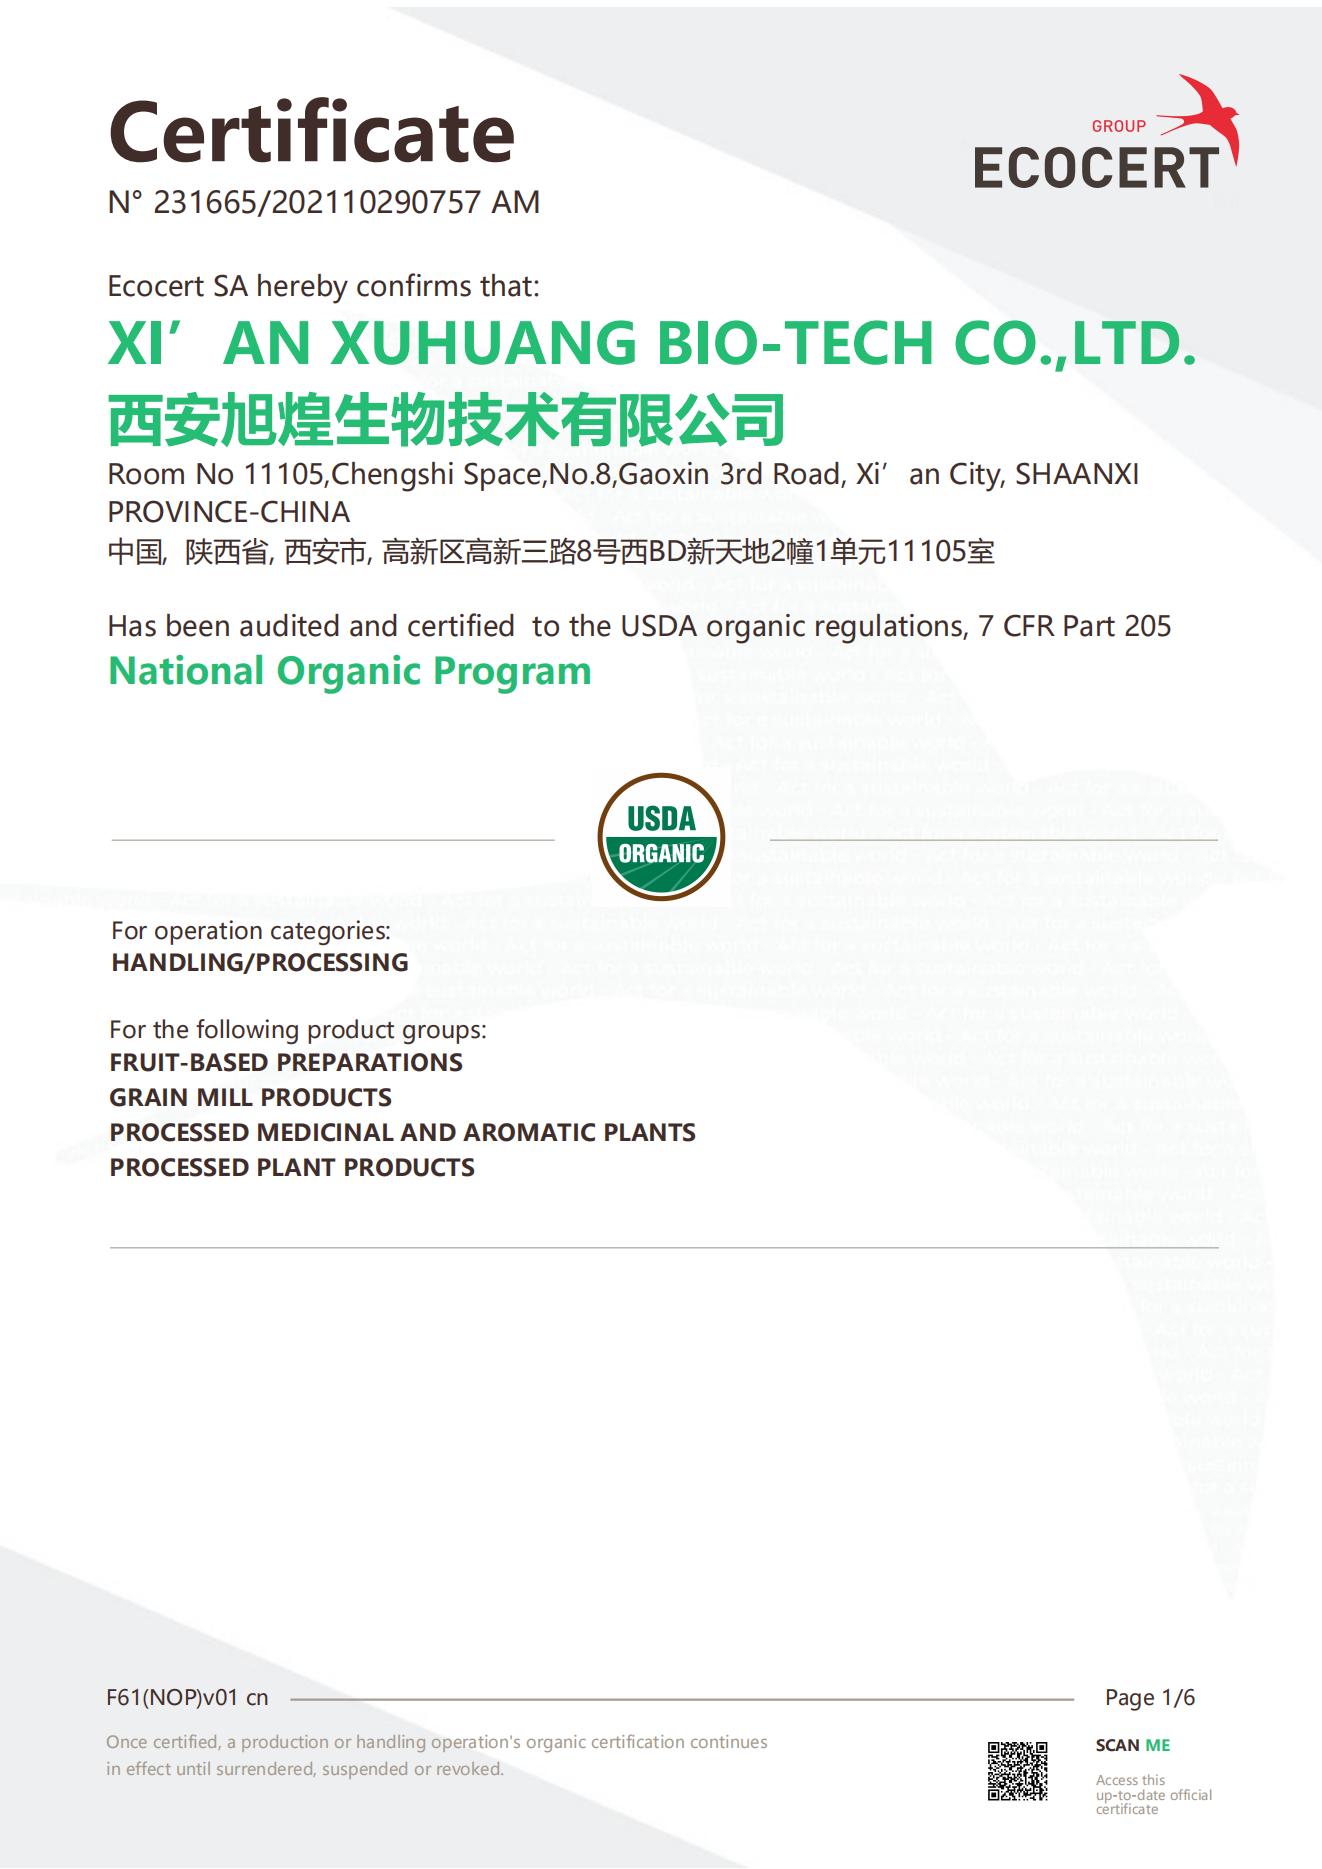 Certificado orgânico EUA (Nop) -xuhuang